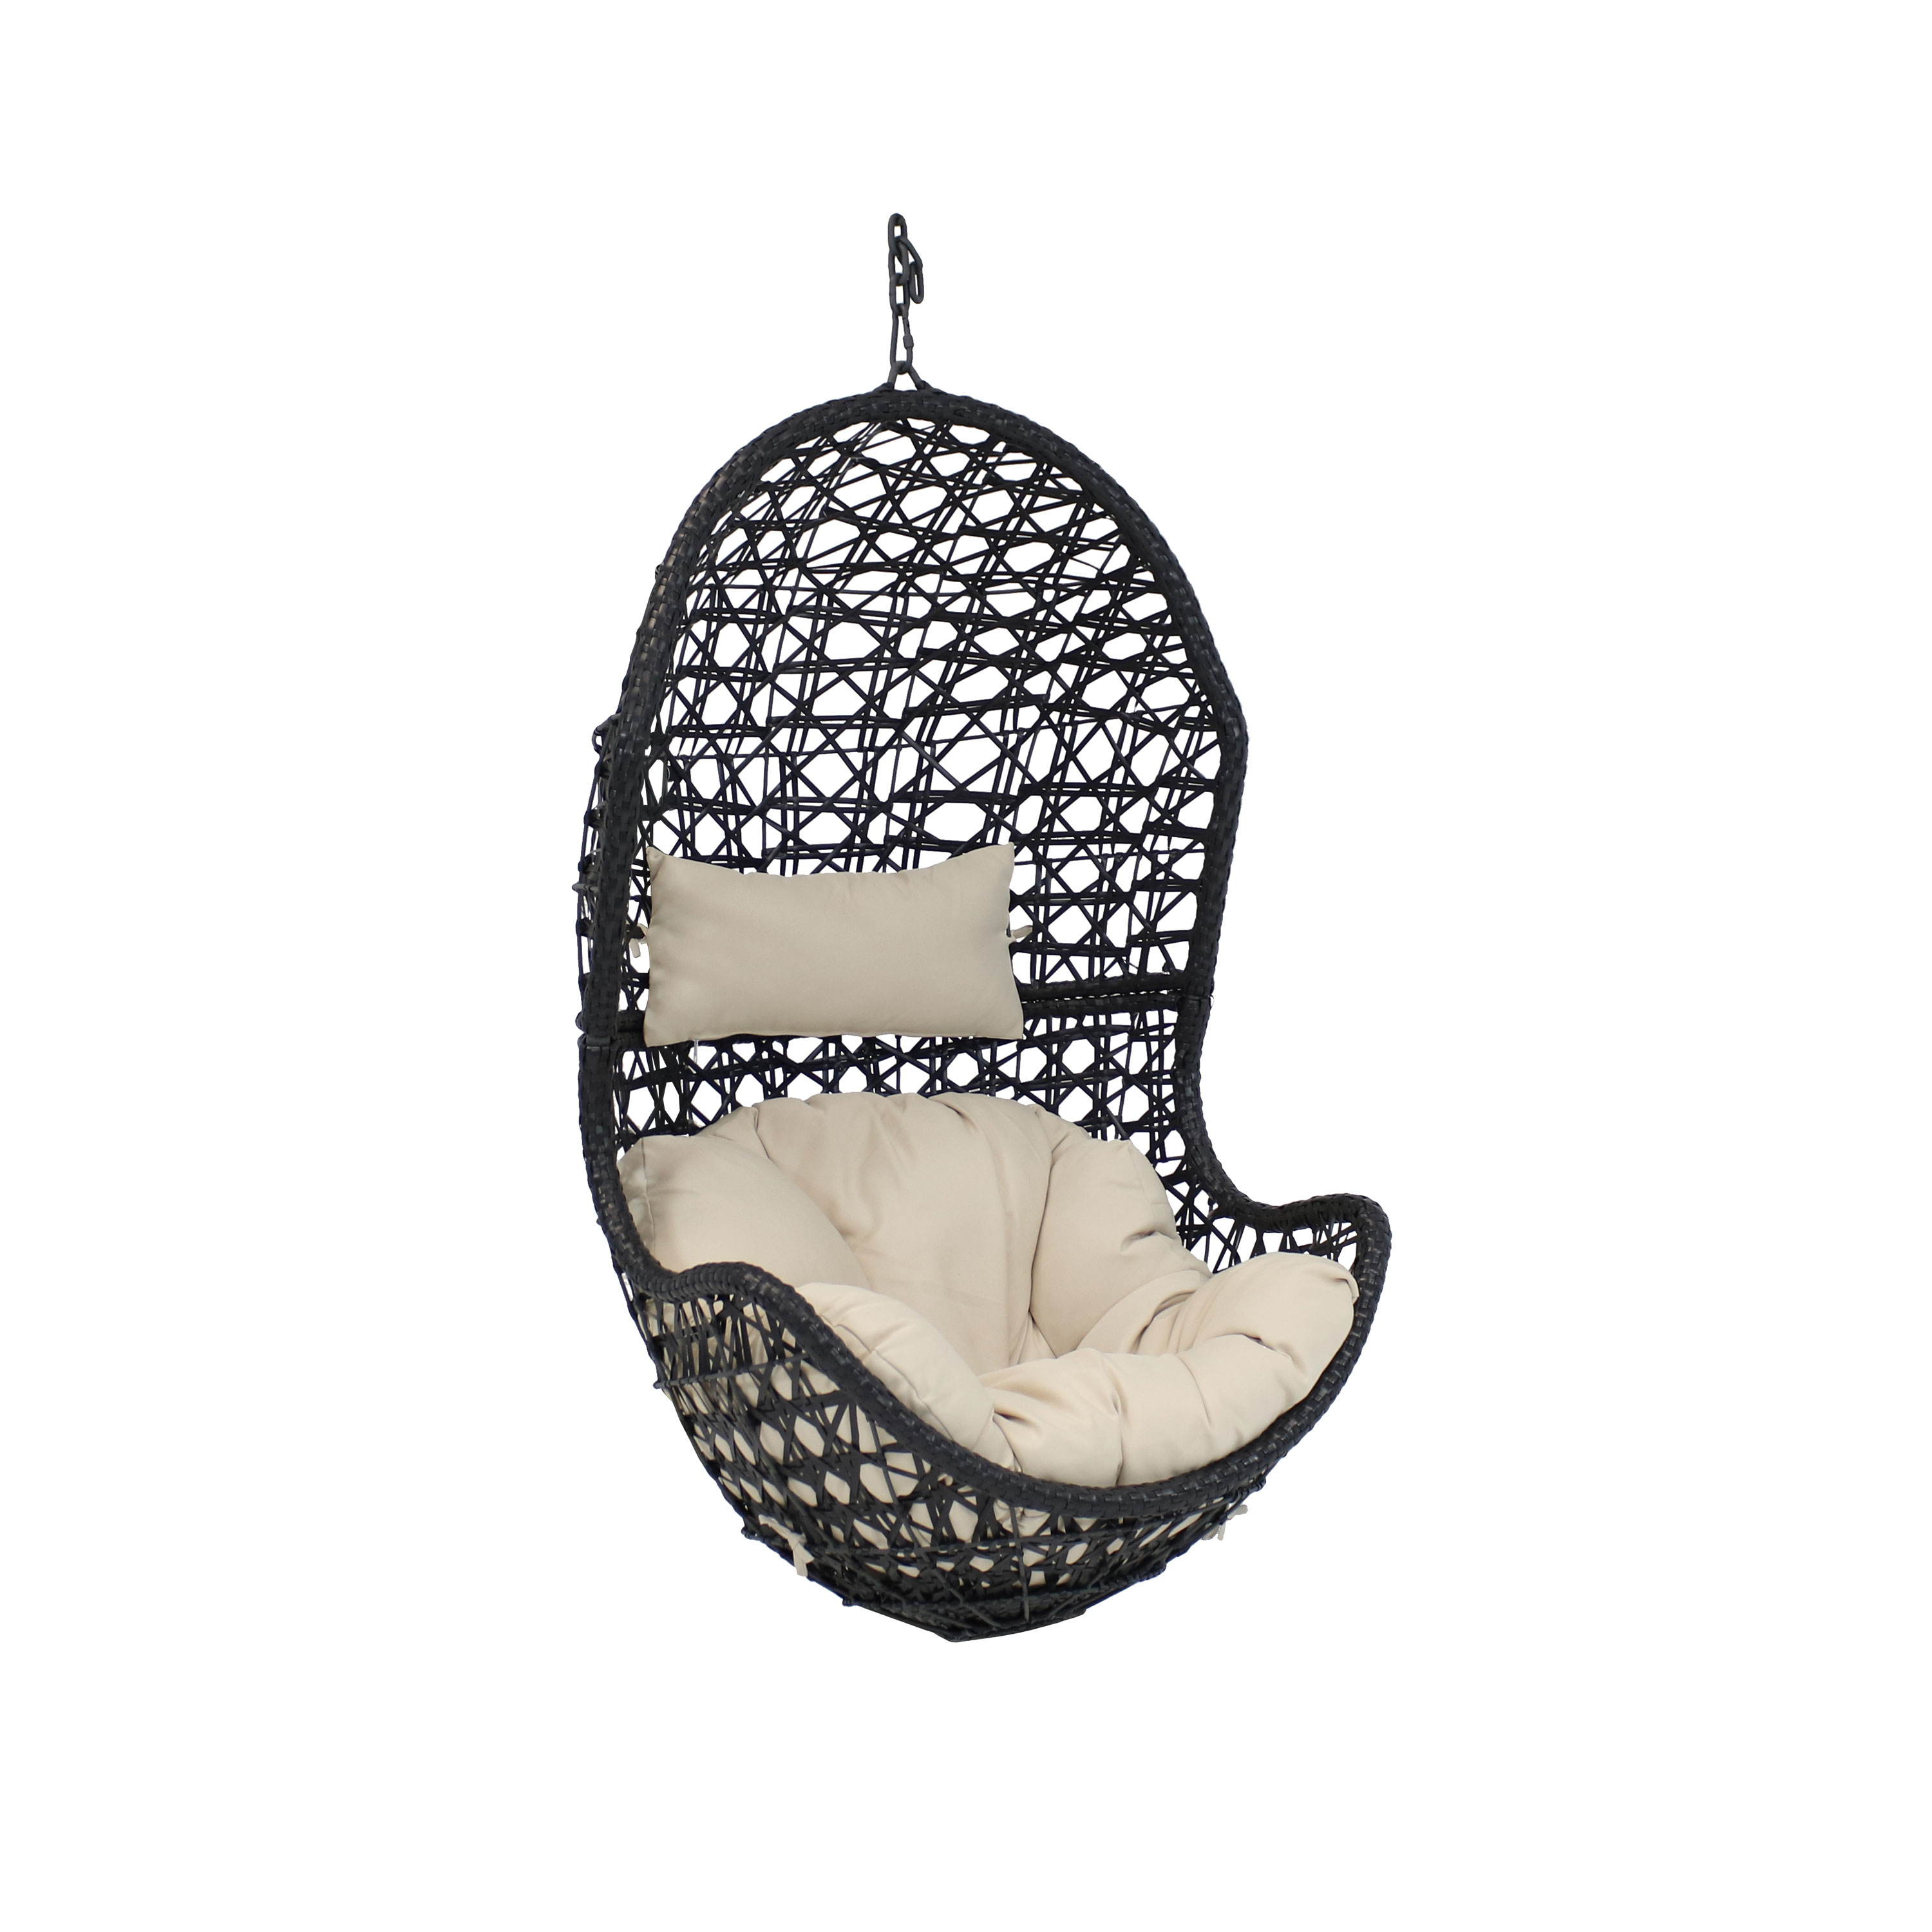 Sunnydaze Cordelia Hanging Egg Chair, Resin Wicker, Large Basket Design, Outdoor Use, Includes Cushion, Beige